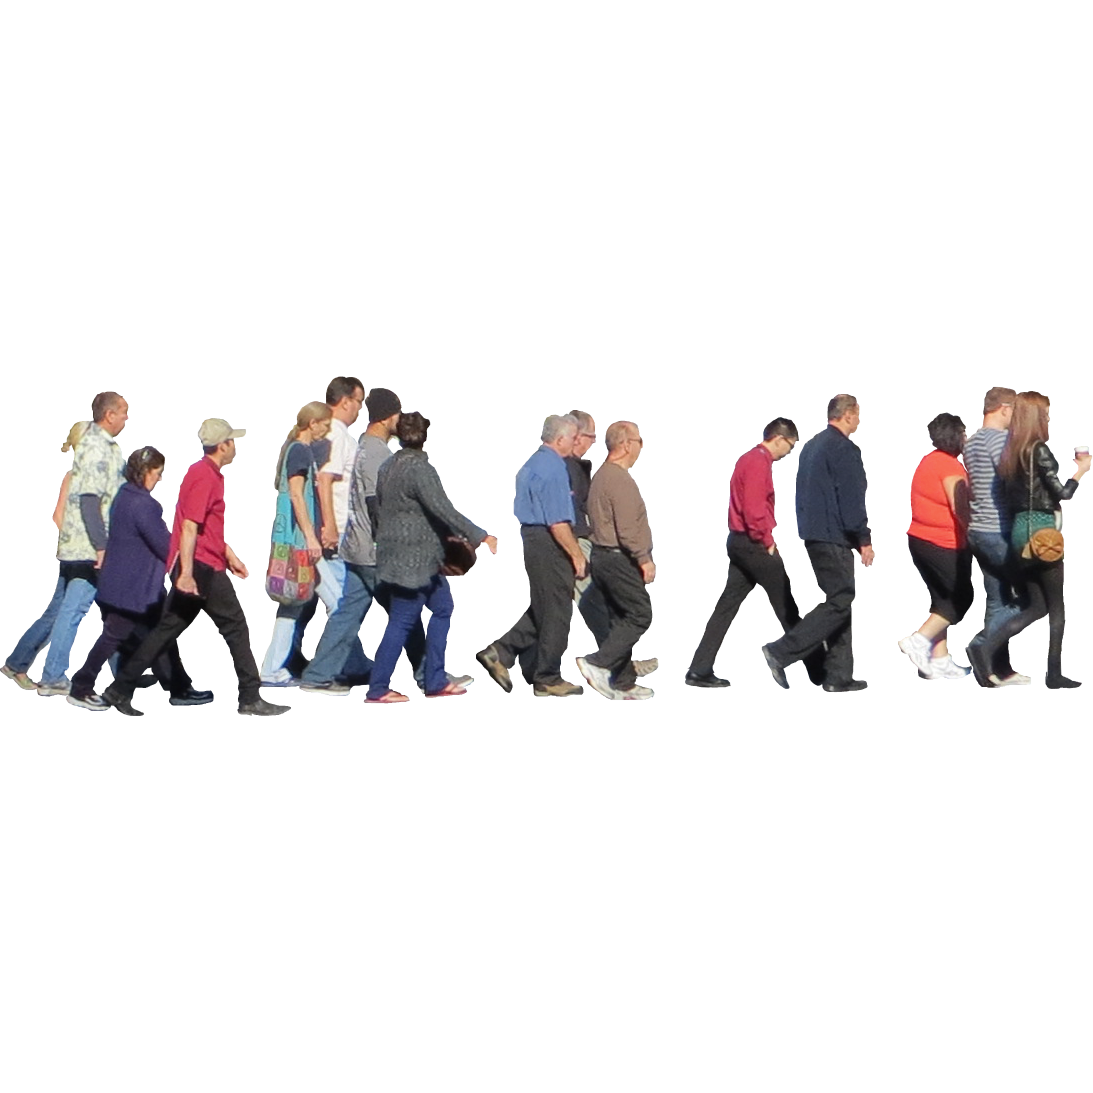 Crowd of People Walking Photoshop